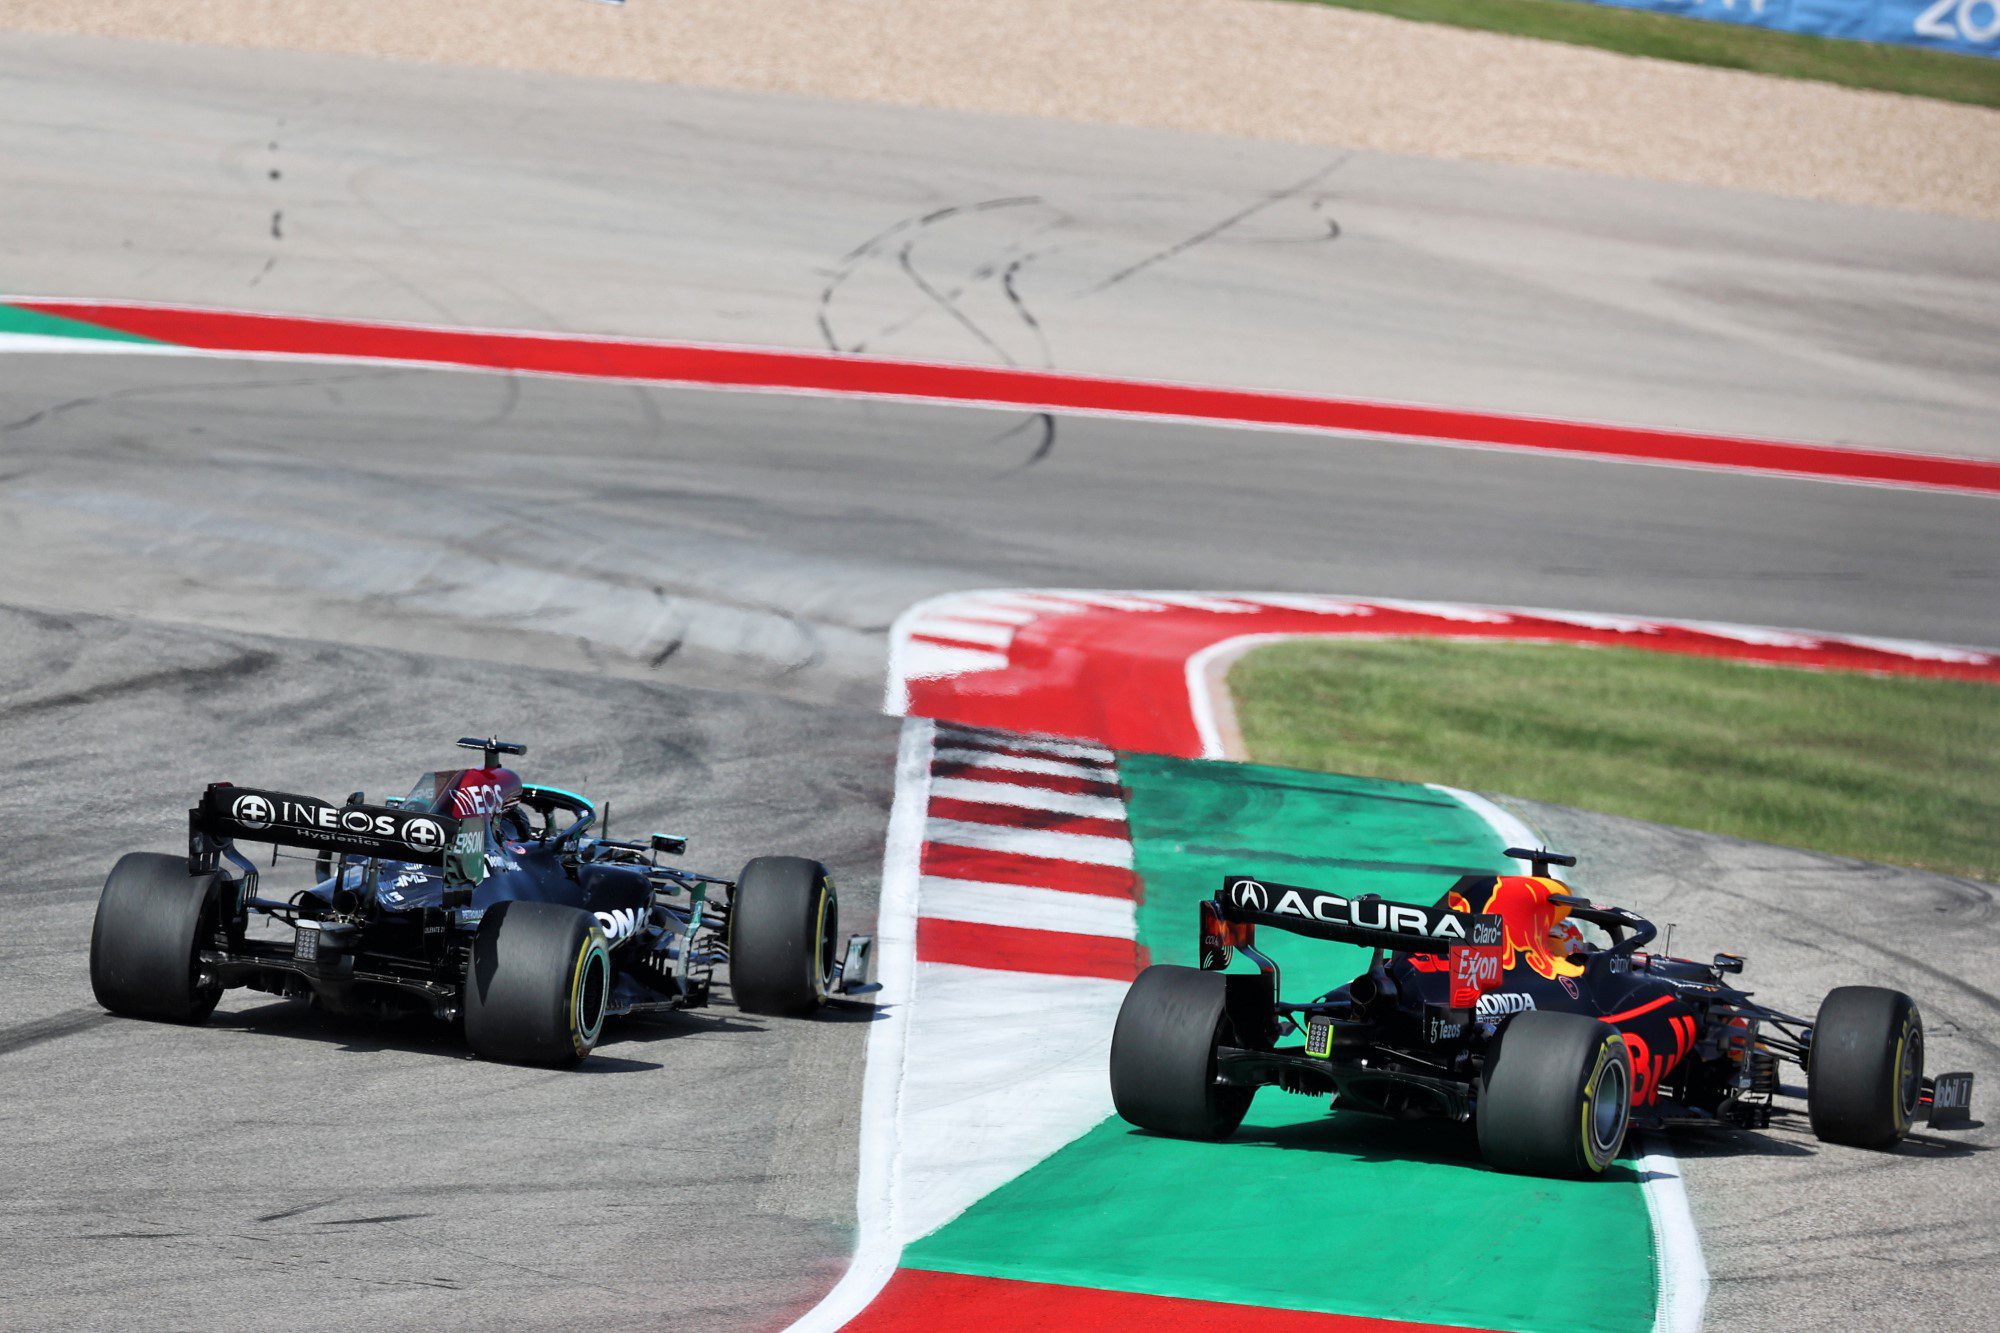 Max Verstappen e Lewis Hamilton, Largada, GP dos EUA, Circuito das Américas, F1 2021